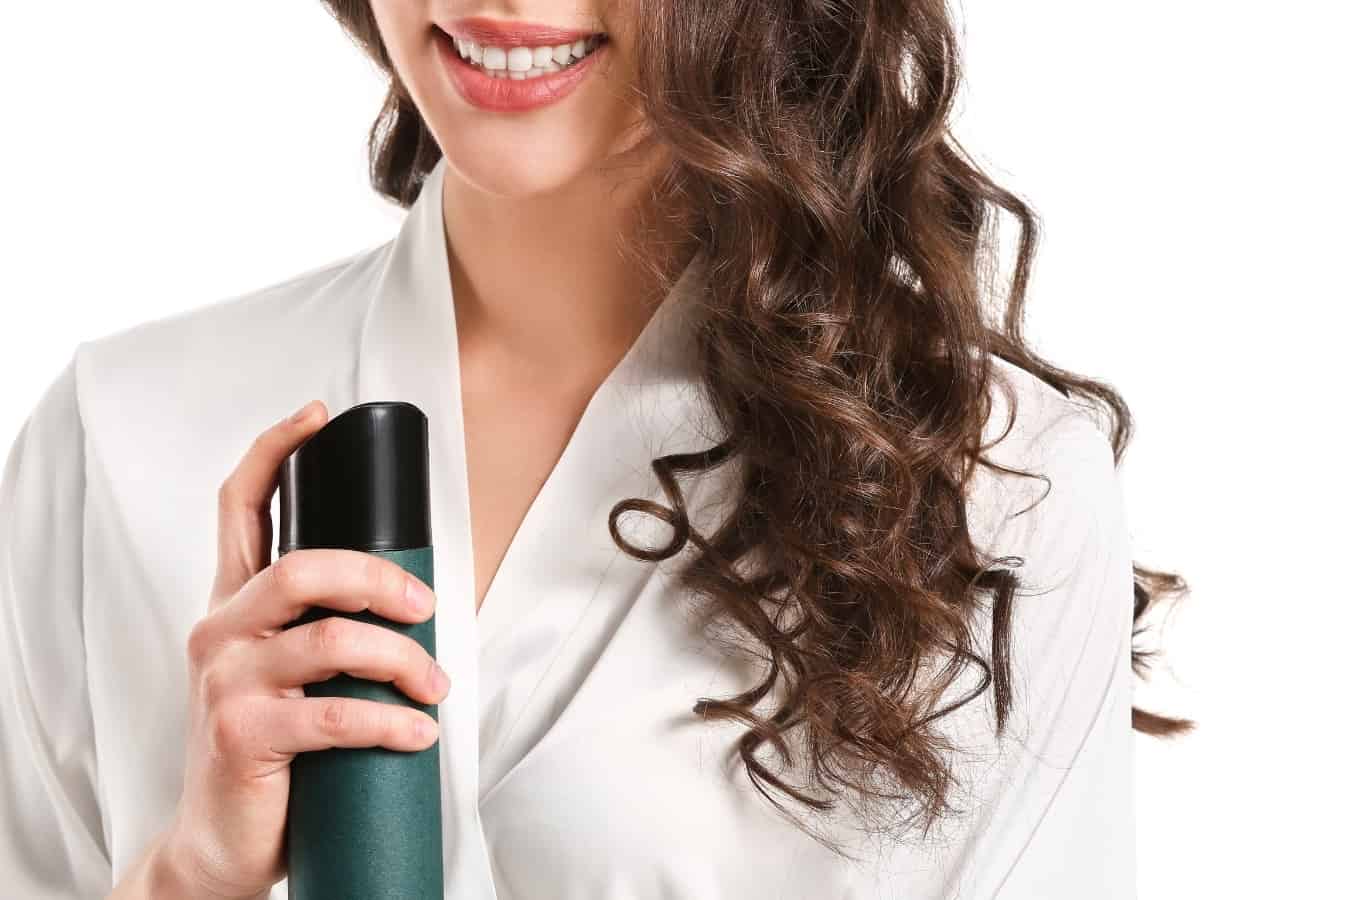 woman with long curly hair holding a hair spray